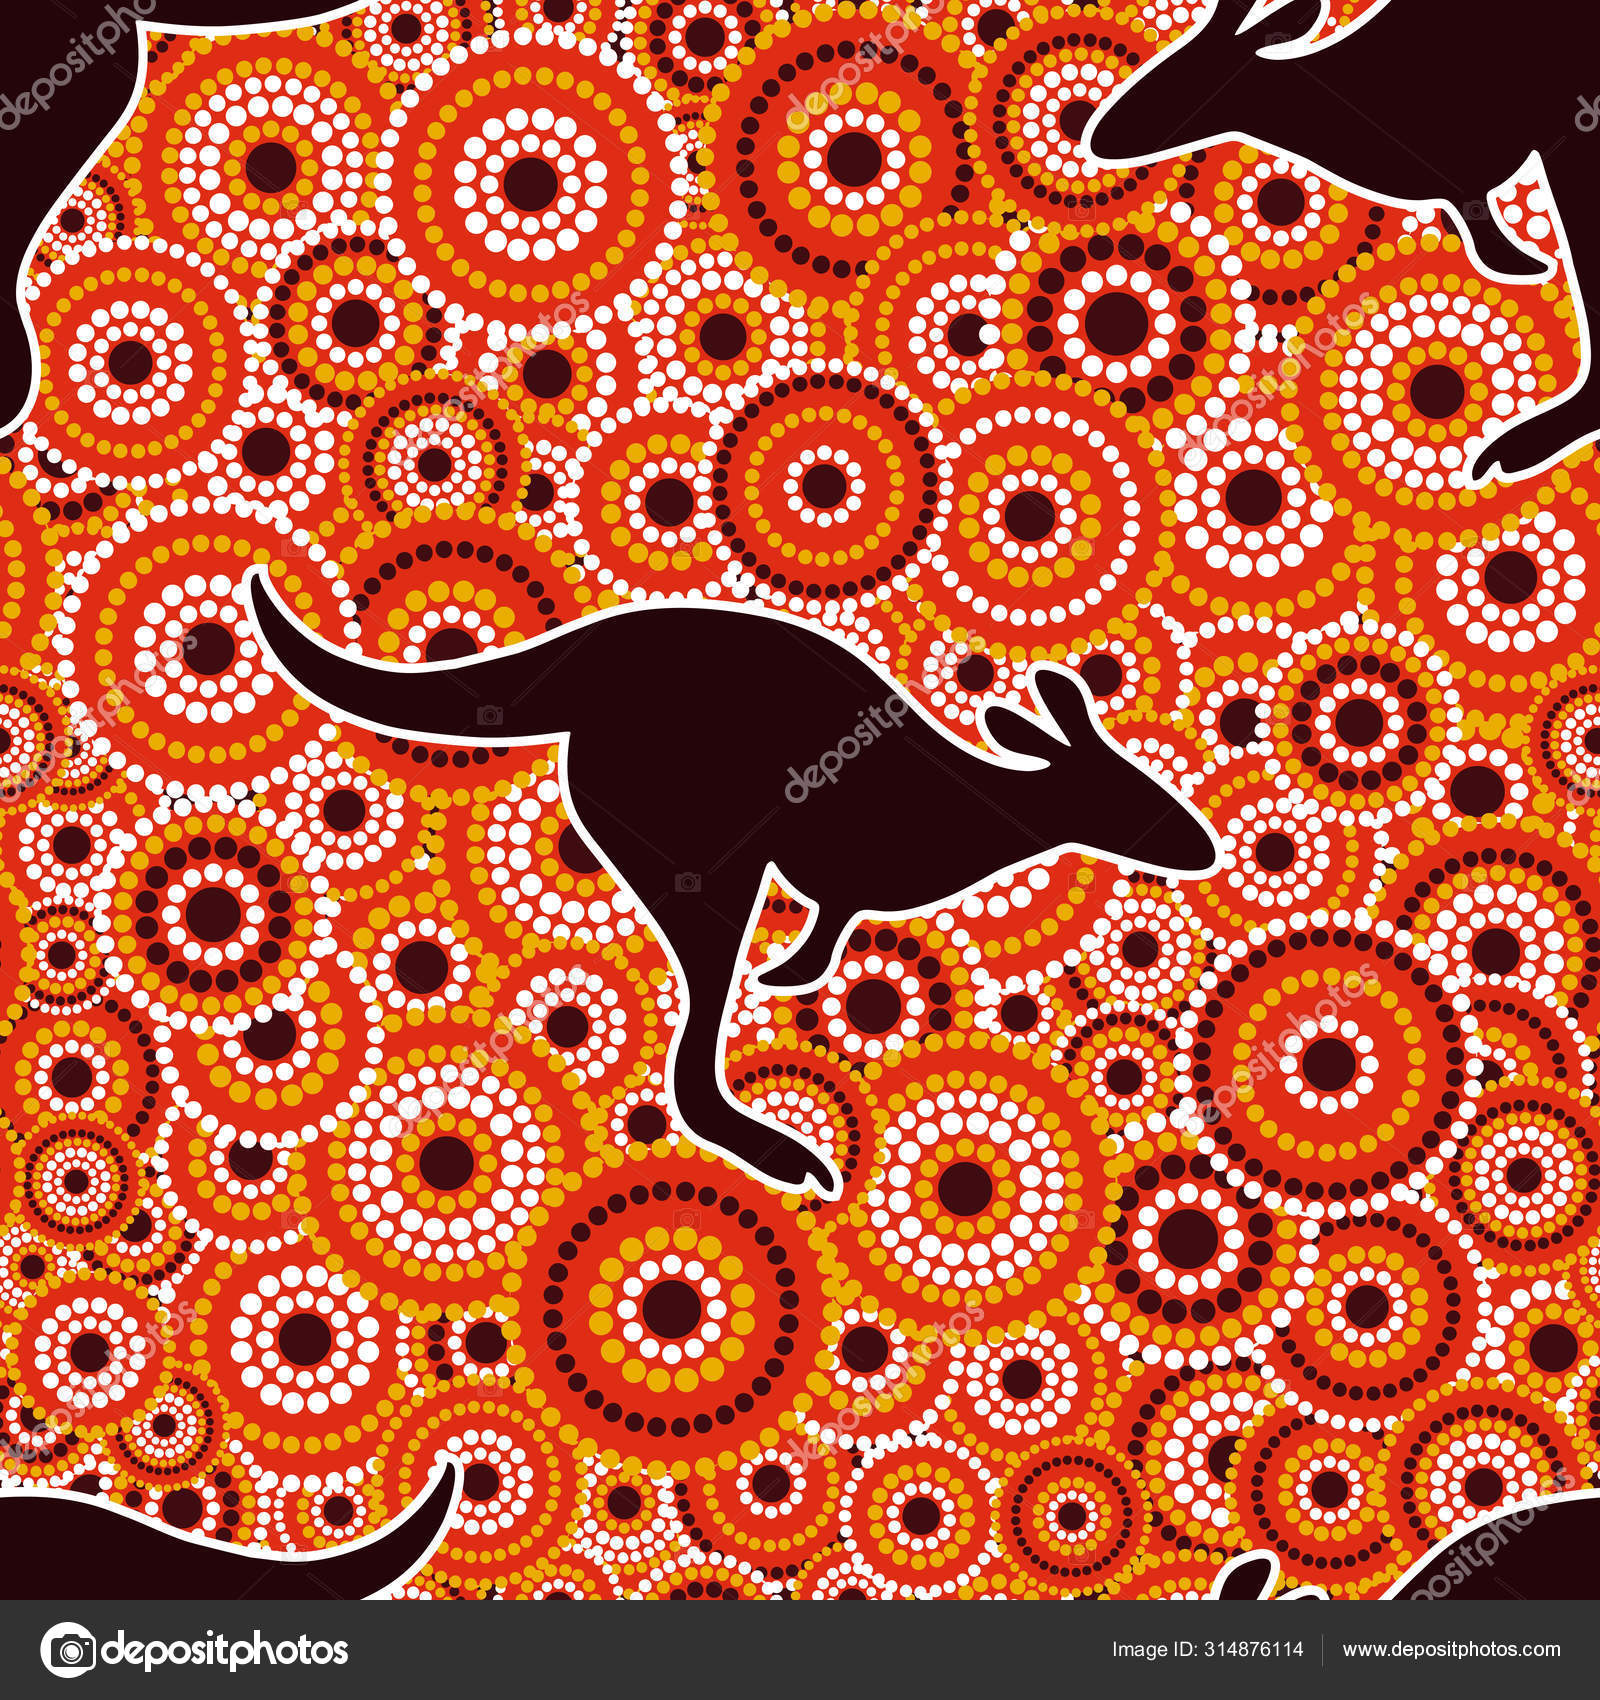 Indigenous Australia | Oxfam Australia